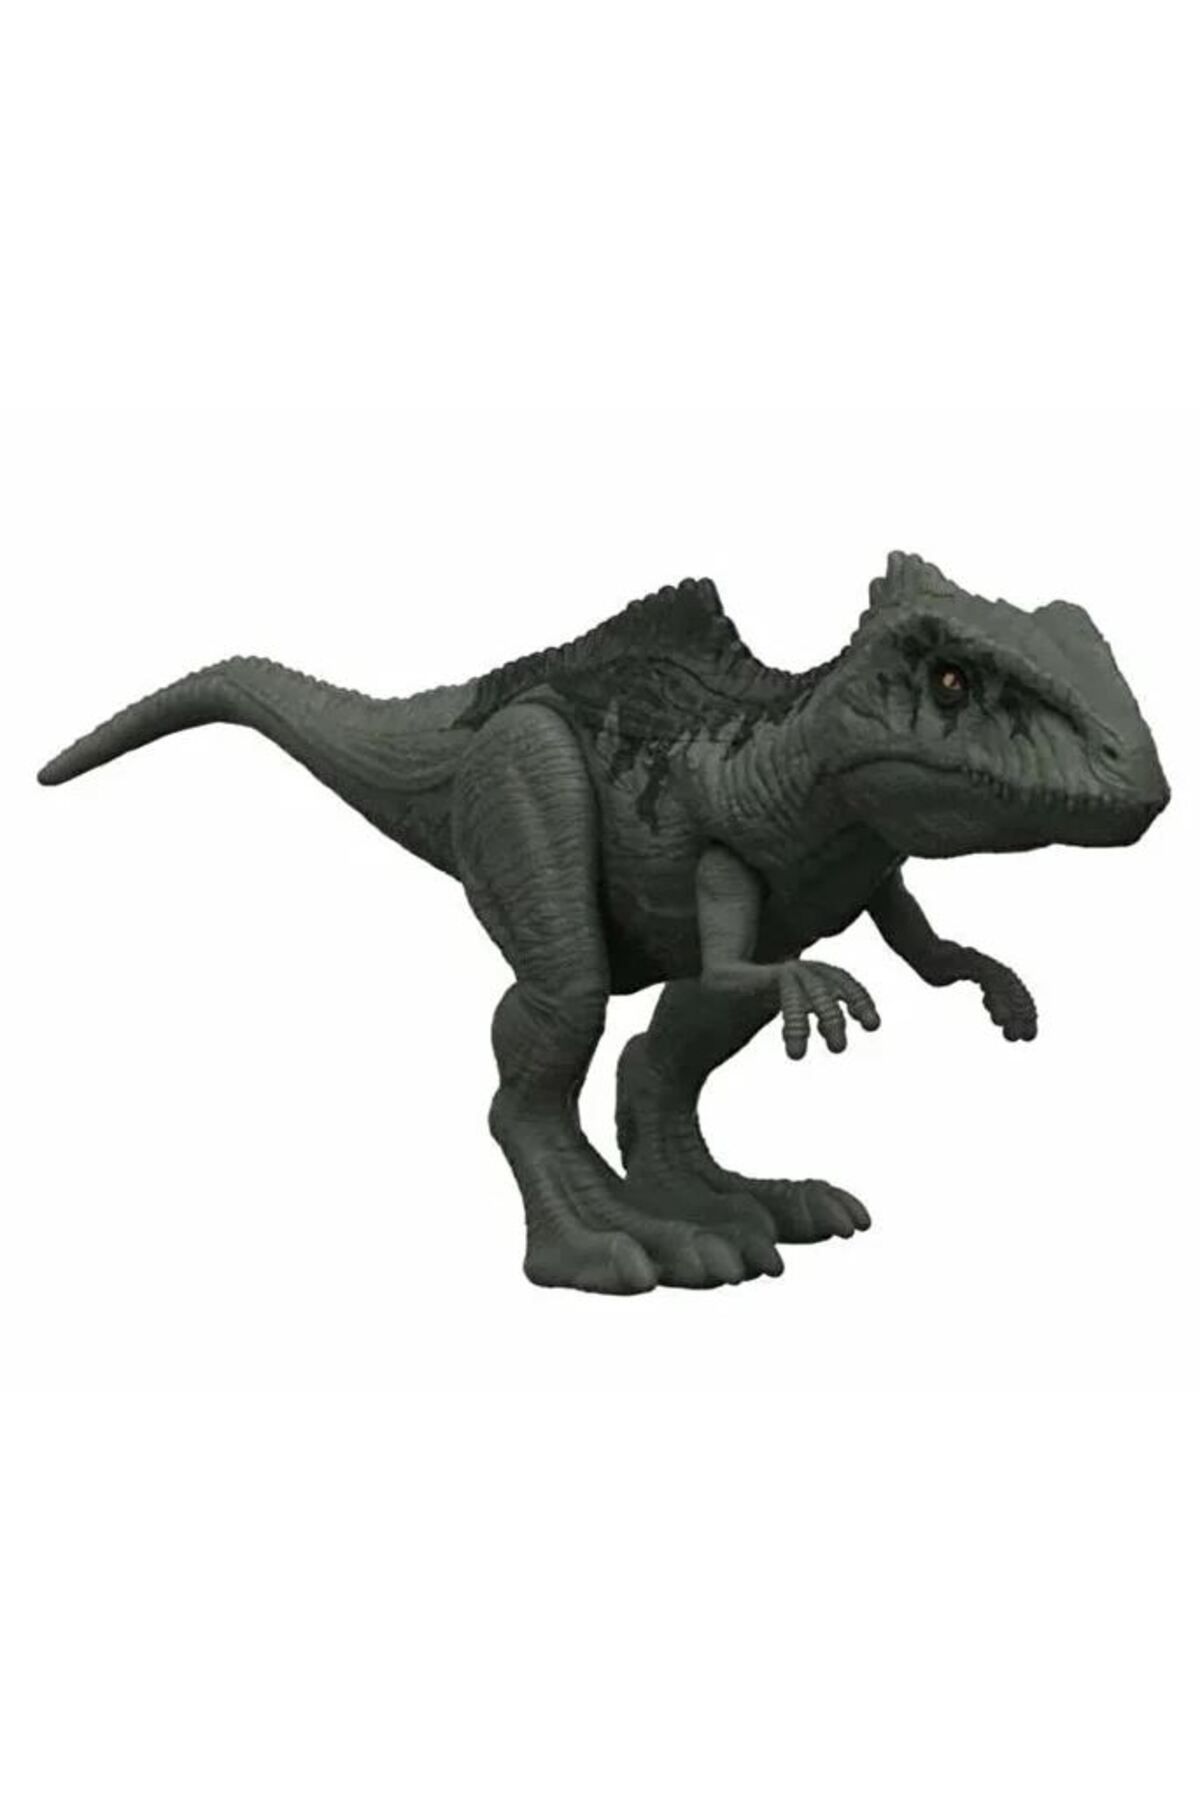 Jurassic World Dinozor Figürü Giganotosaurus GWT52 15 Cm